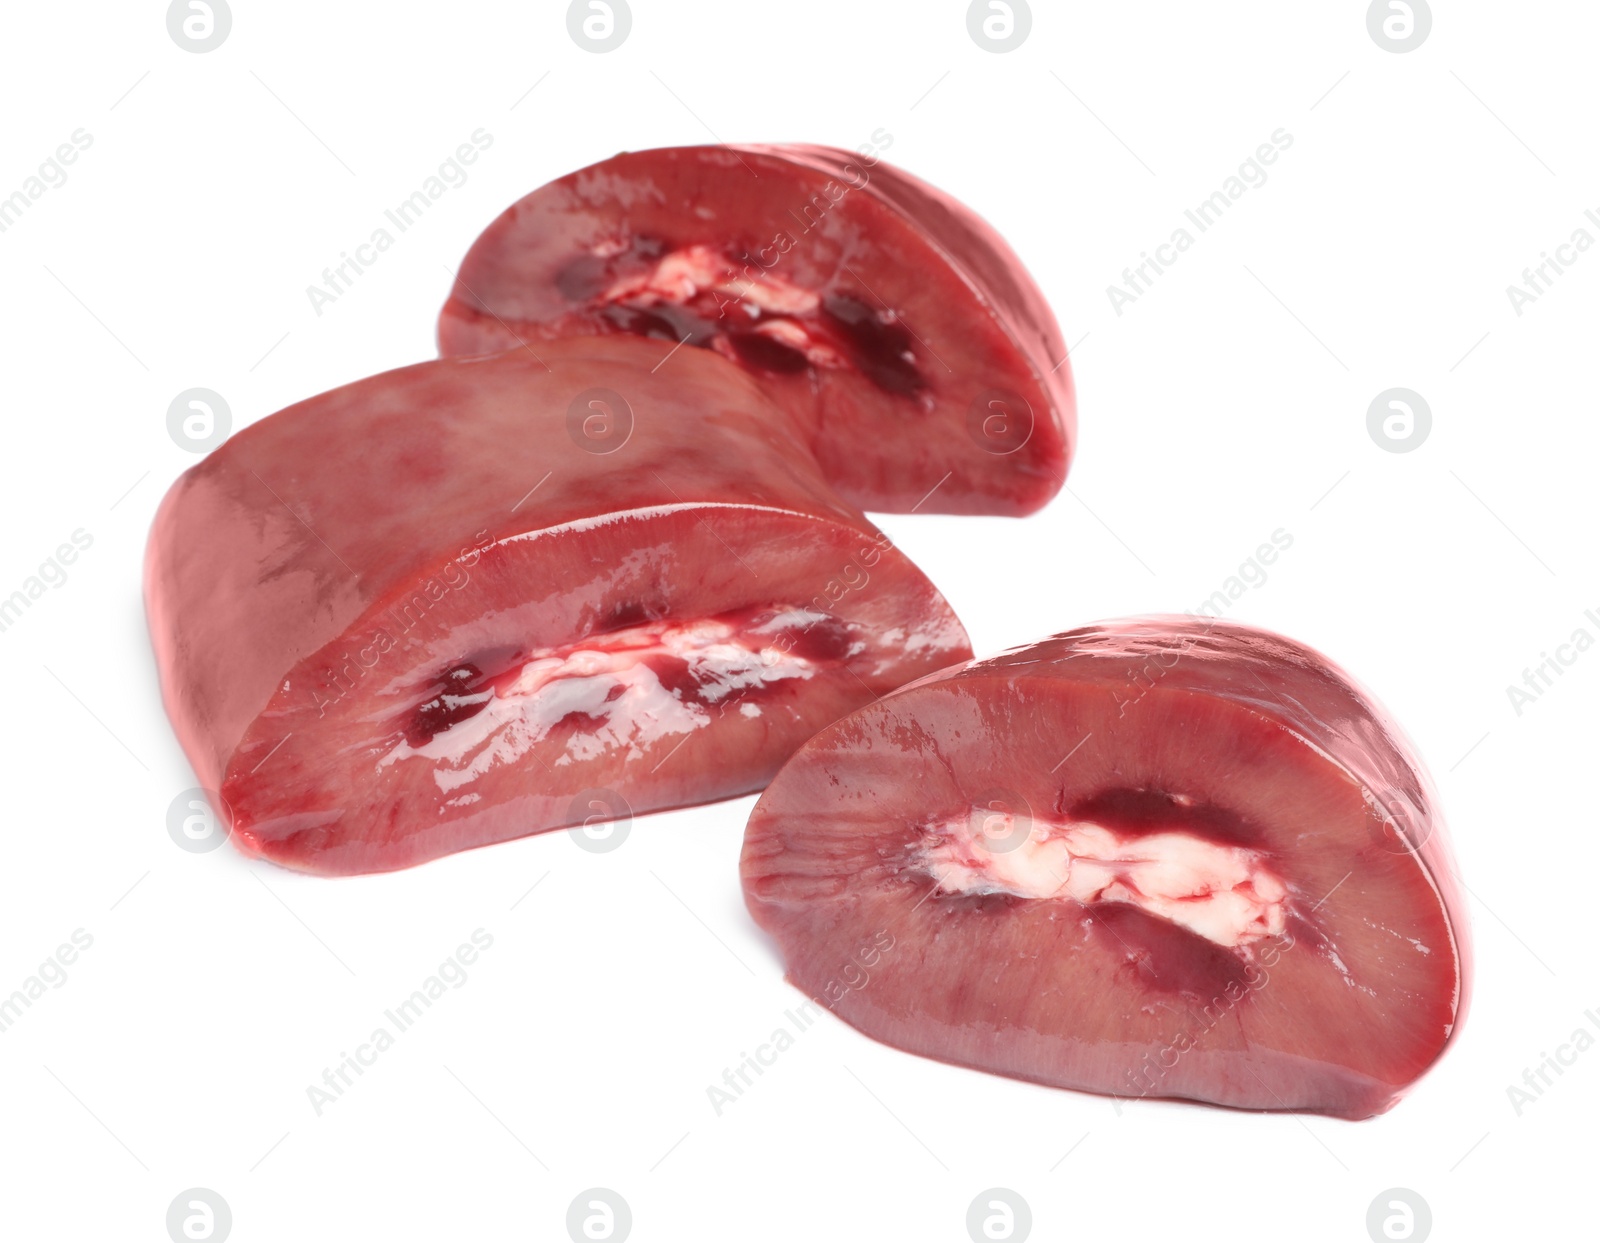 Photo of Cut fresh raw pork kidney on white background